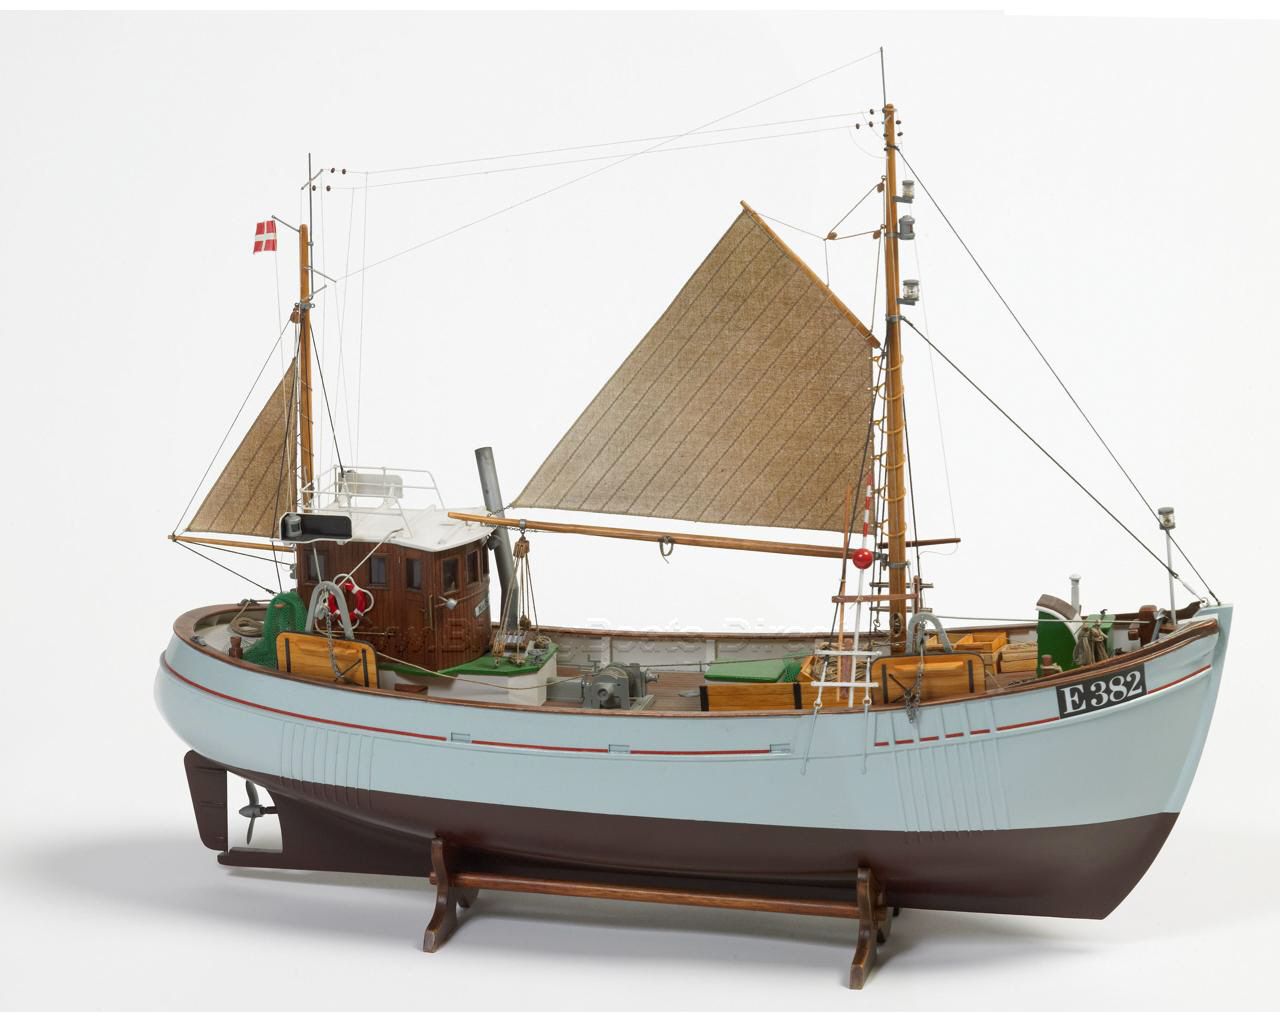 Mary Ann Model Boat Kit - Billing Boats(B472)